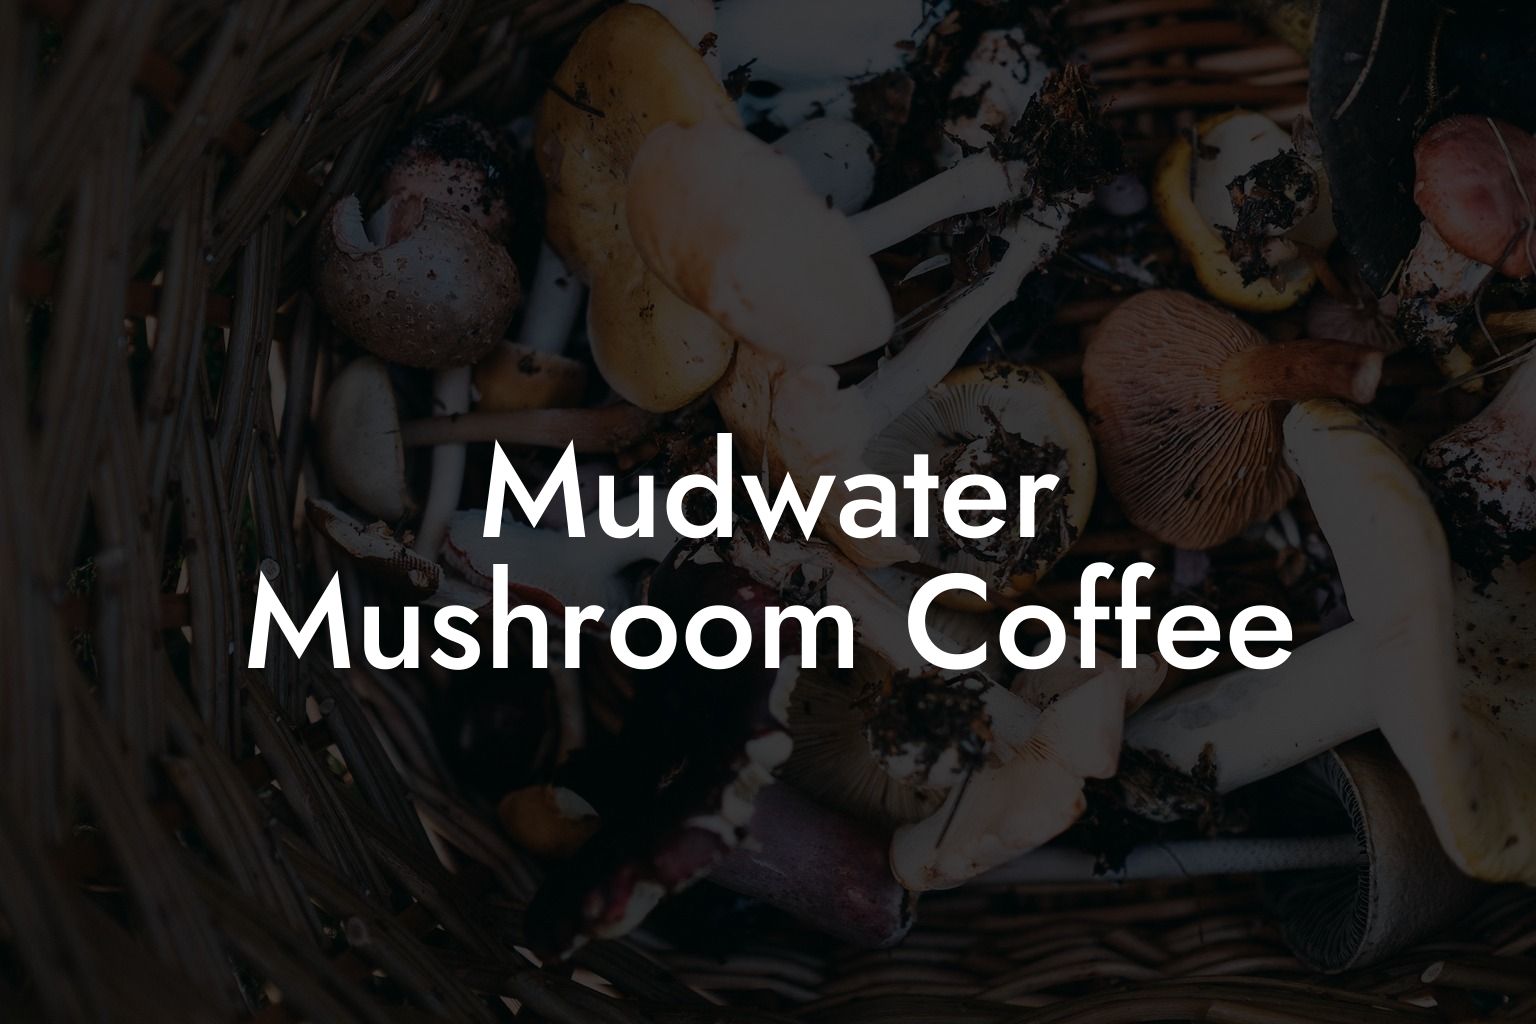 Mudwater Mushroom Coffee